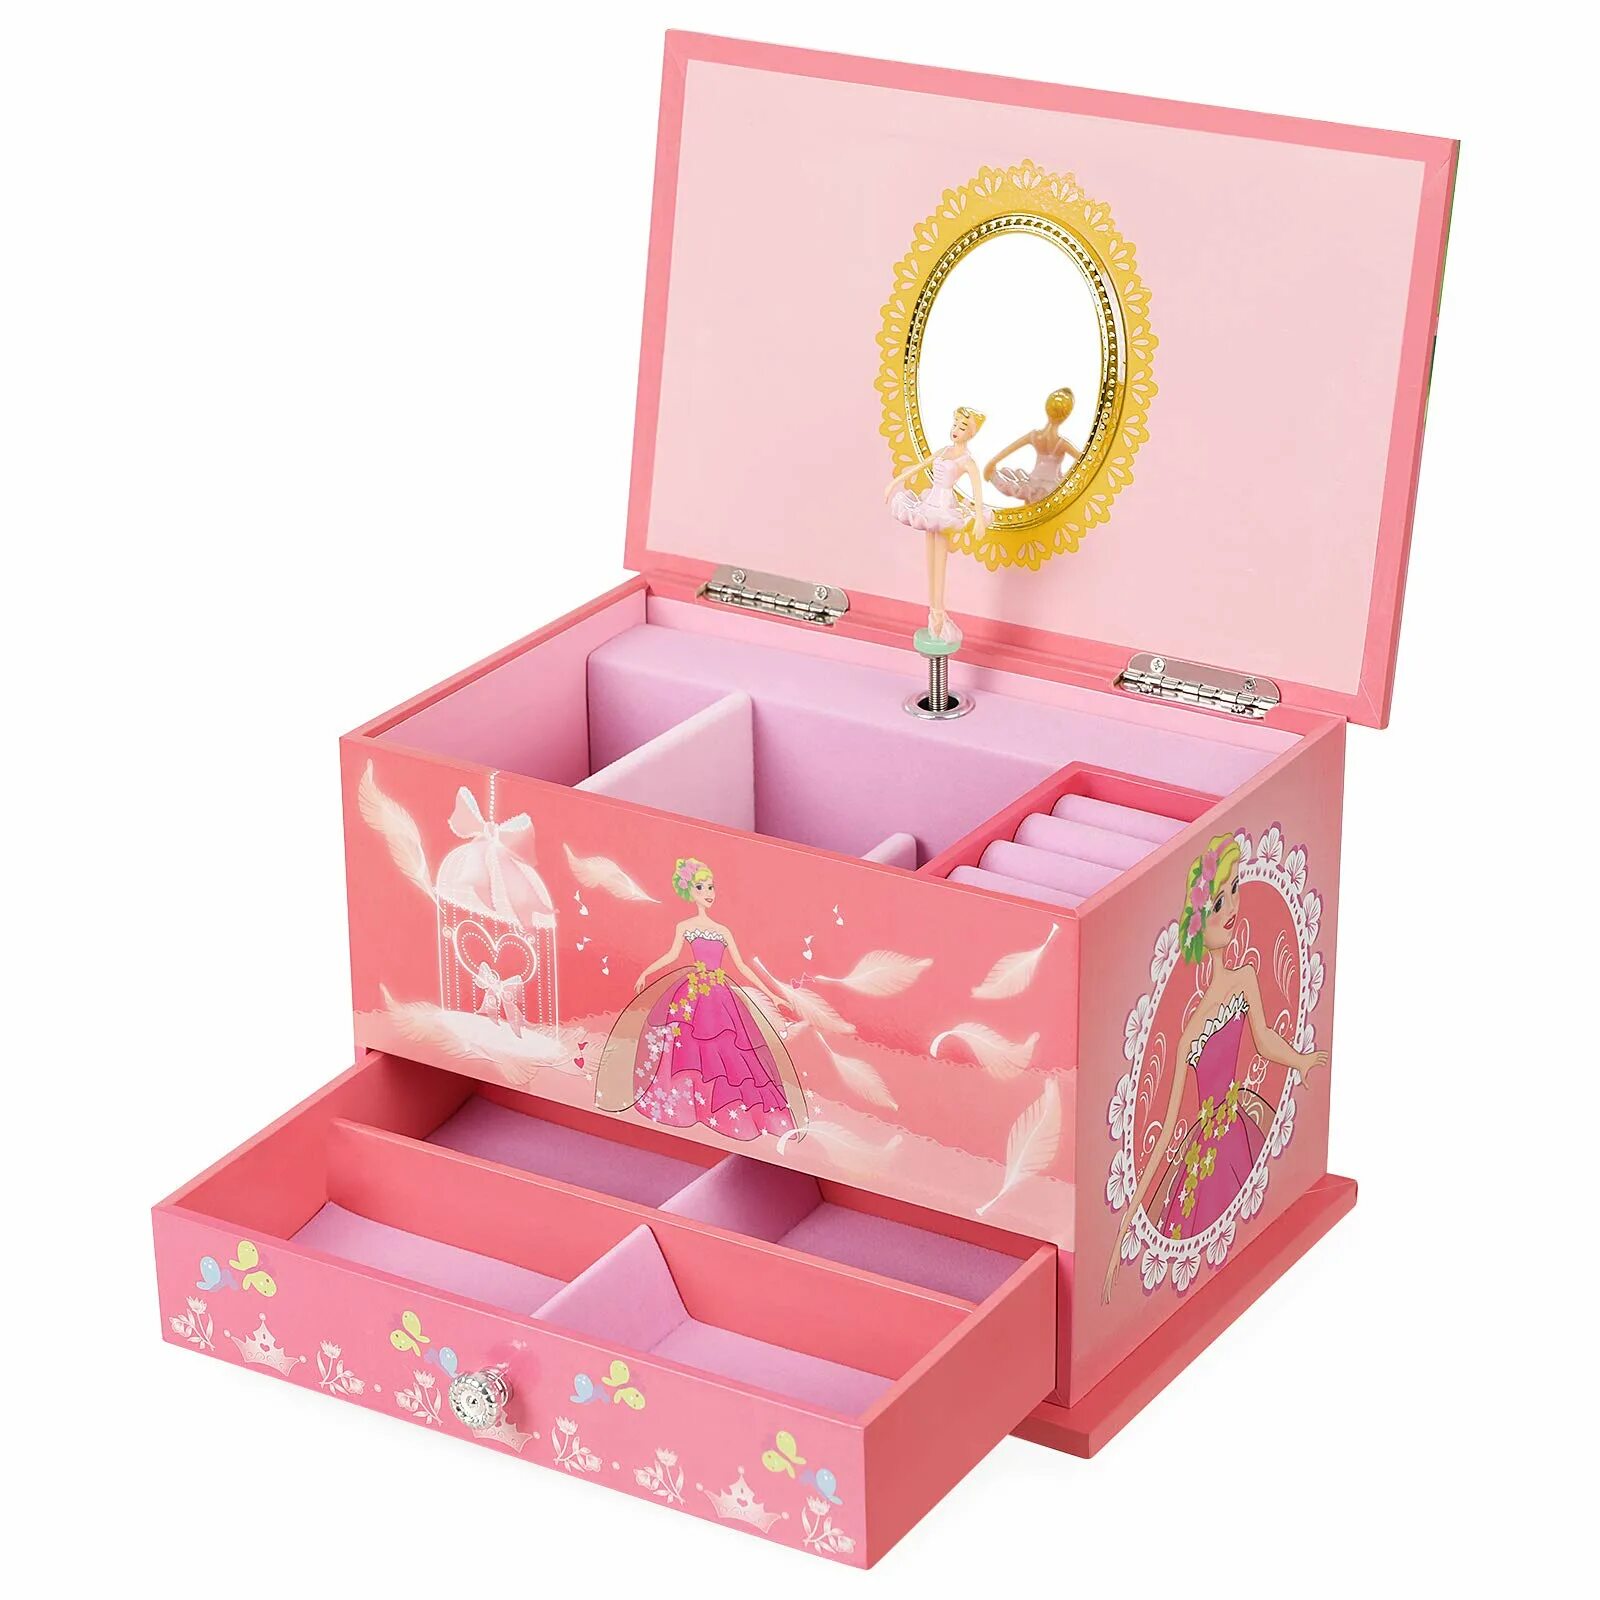 Музыкальная шкатулка сундучок Musical jewerly Box Shenzhen Toys д54155. Подарок для девочки. Подарок девочке на 7 лет. Подарок на новый год девочке.